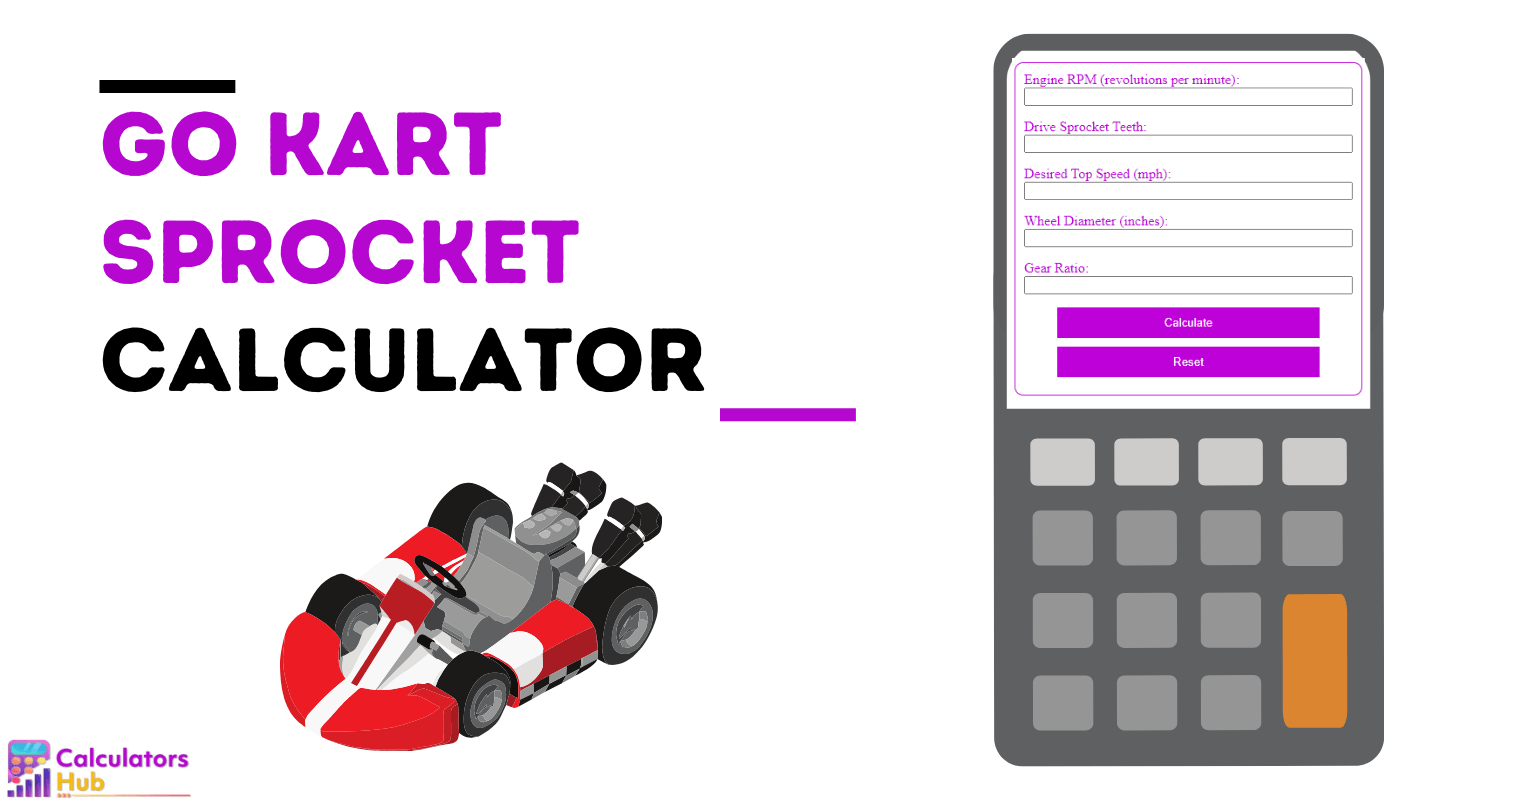 Go Kart Sprocket Calculator